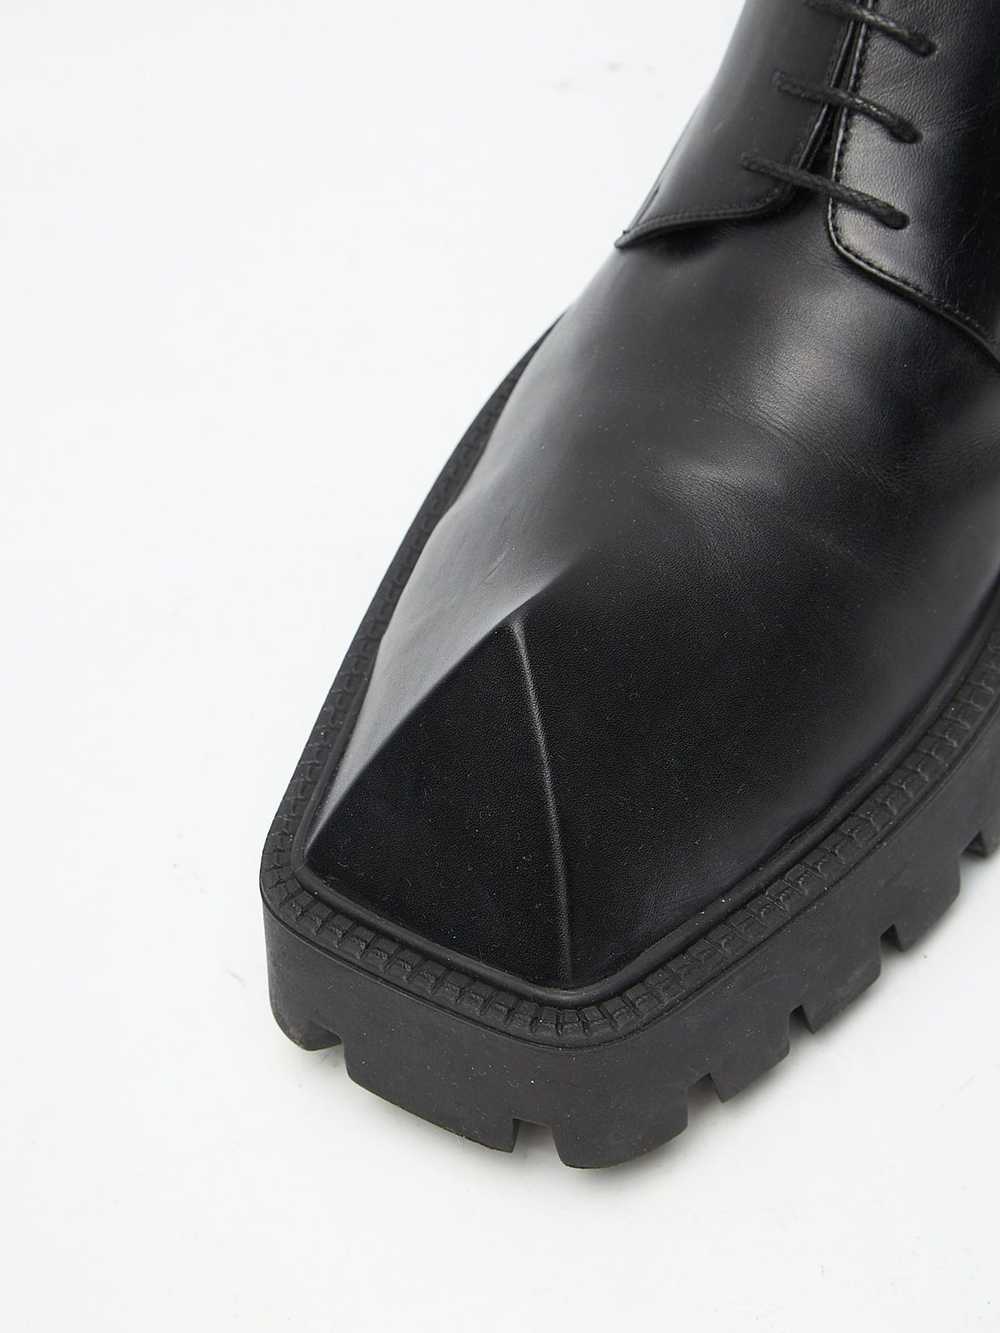 Balenciaga Black Rhino Leather Derby Shoes - image 4